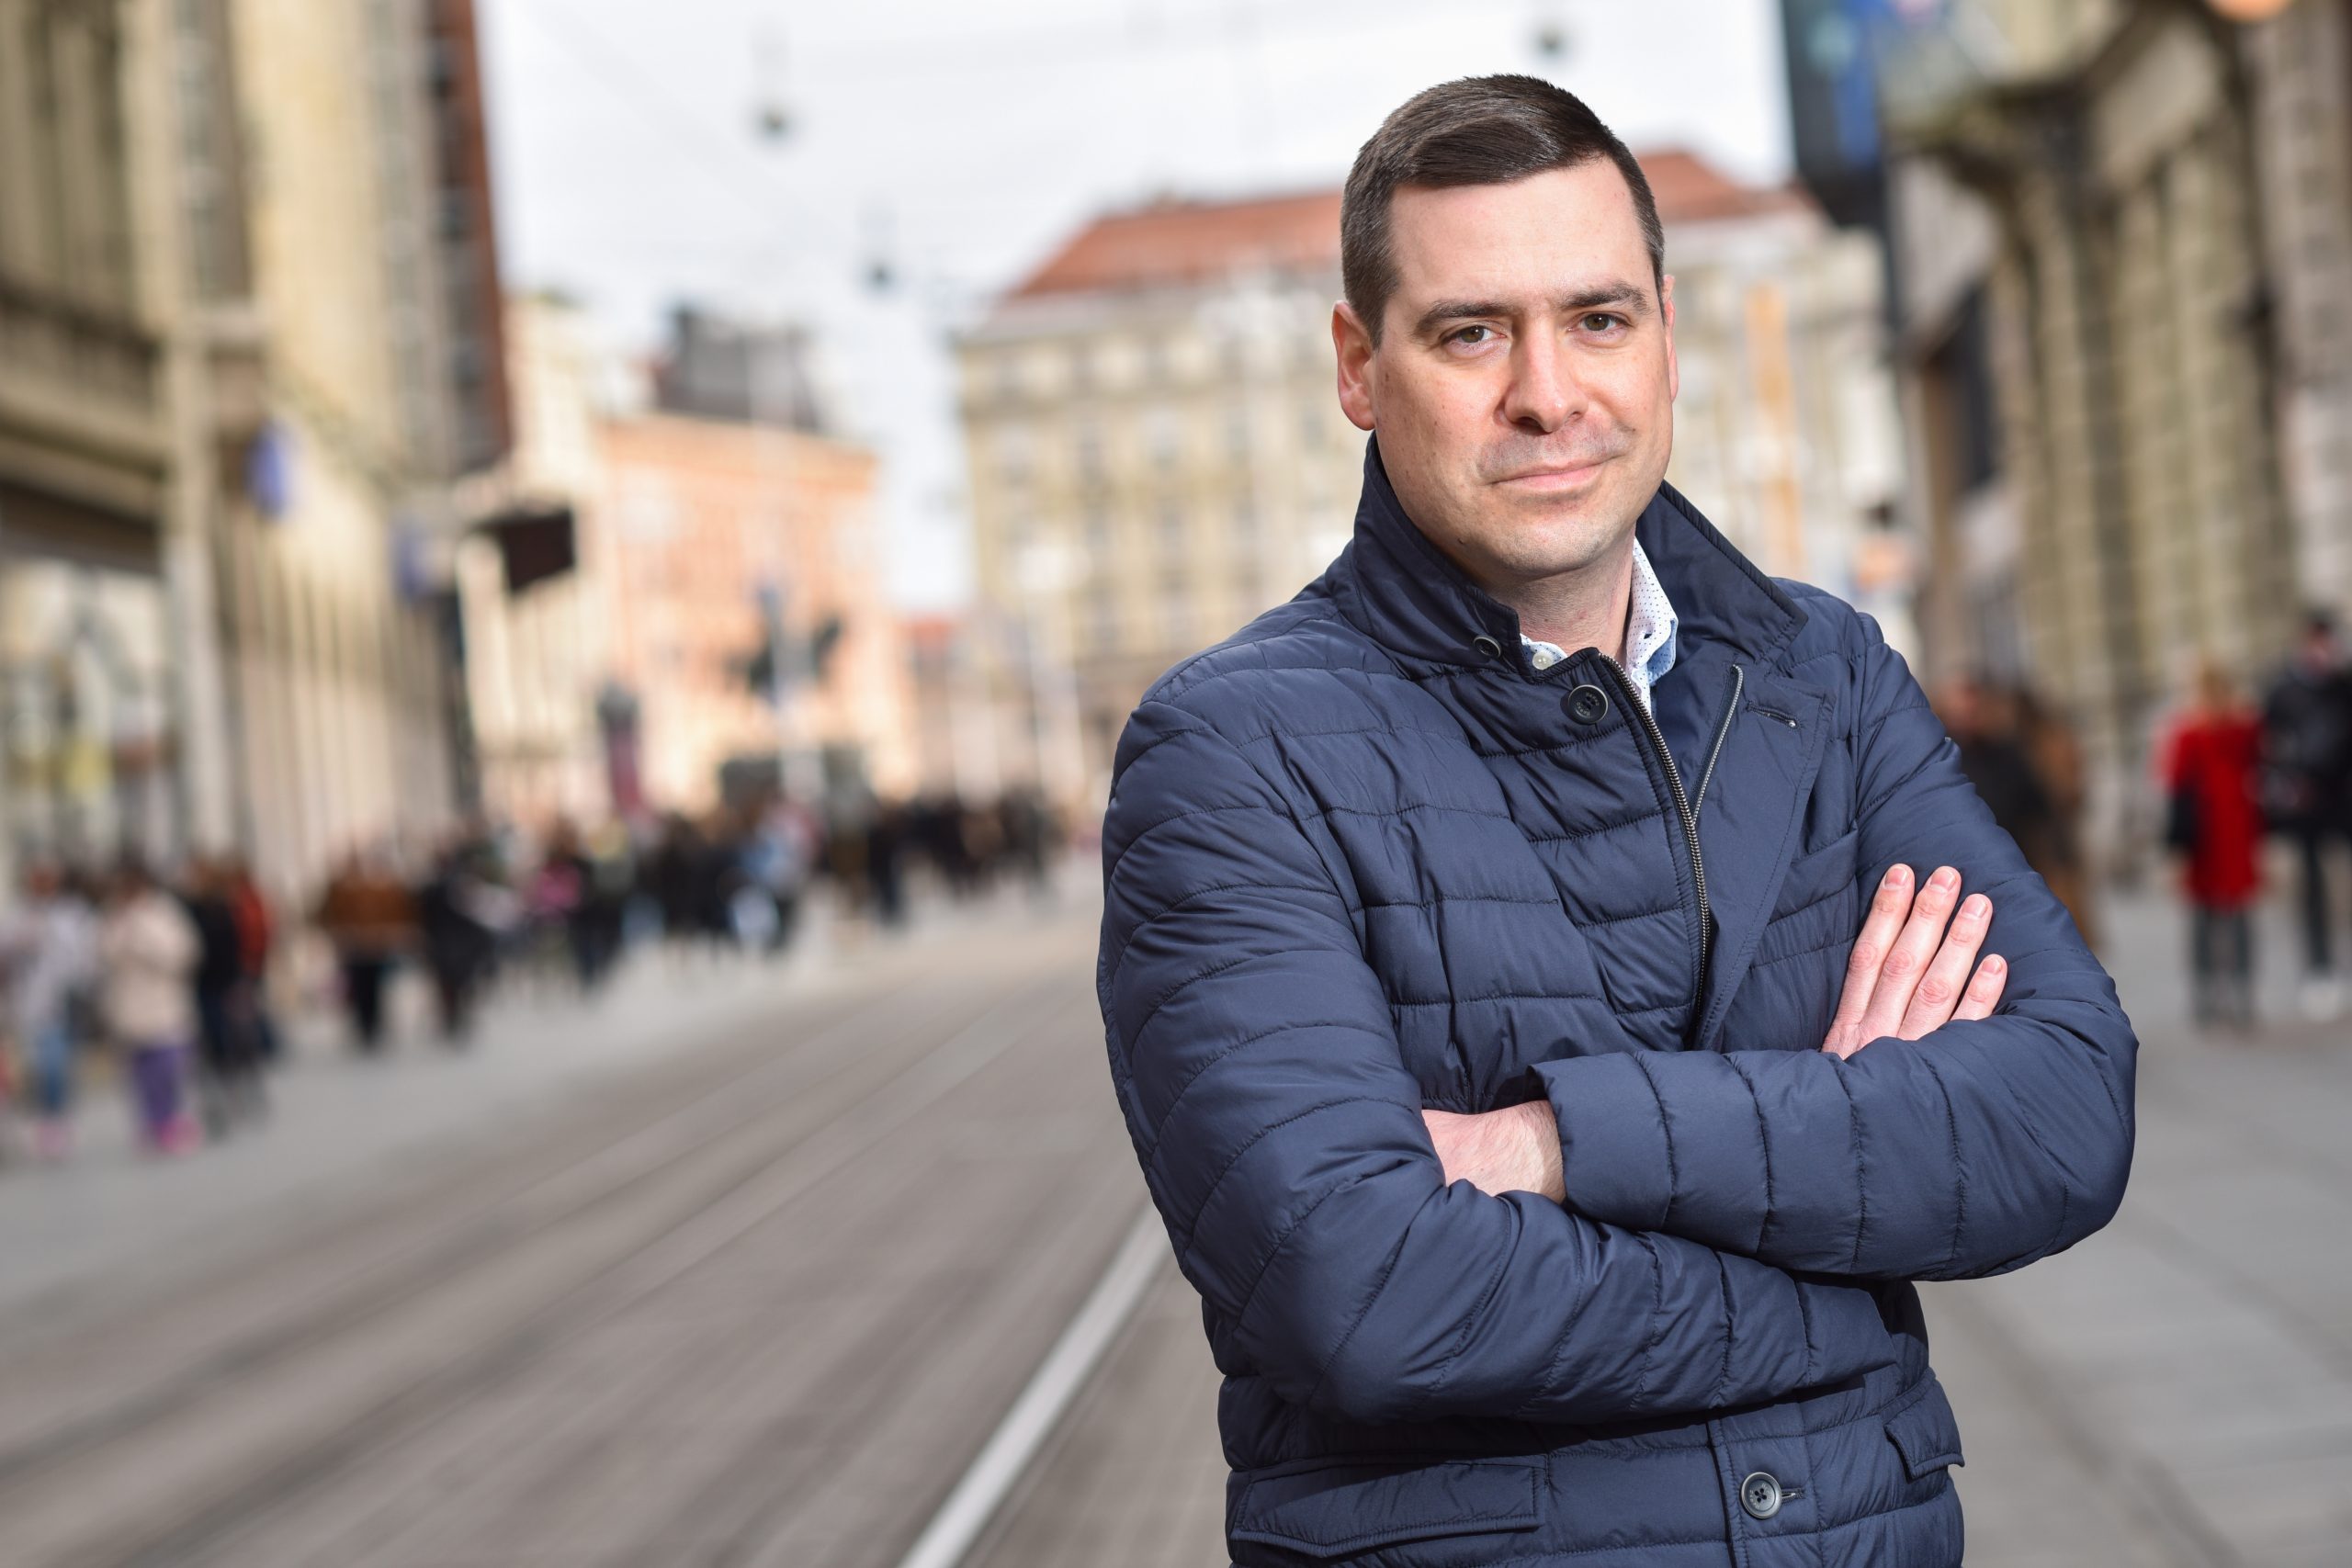 06.02.2021., Zagreb - Mislav Herman, predsjednik zagrebacke Gradske skupstine.

Photo: Sasa Zinaja/NFoto/PIXSELL